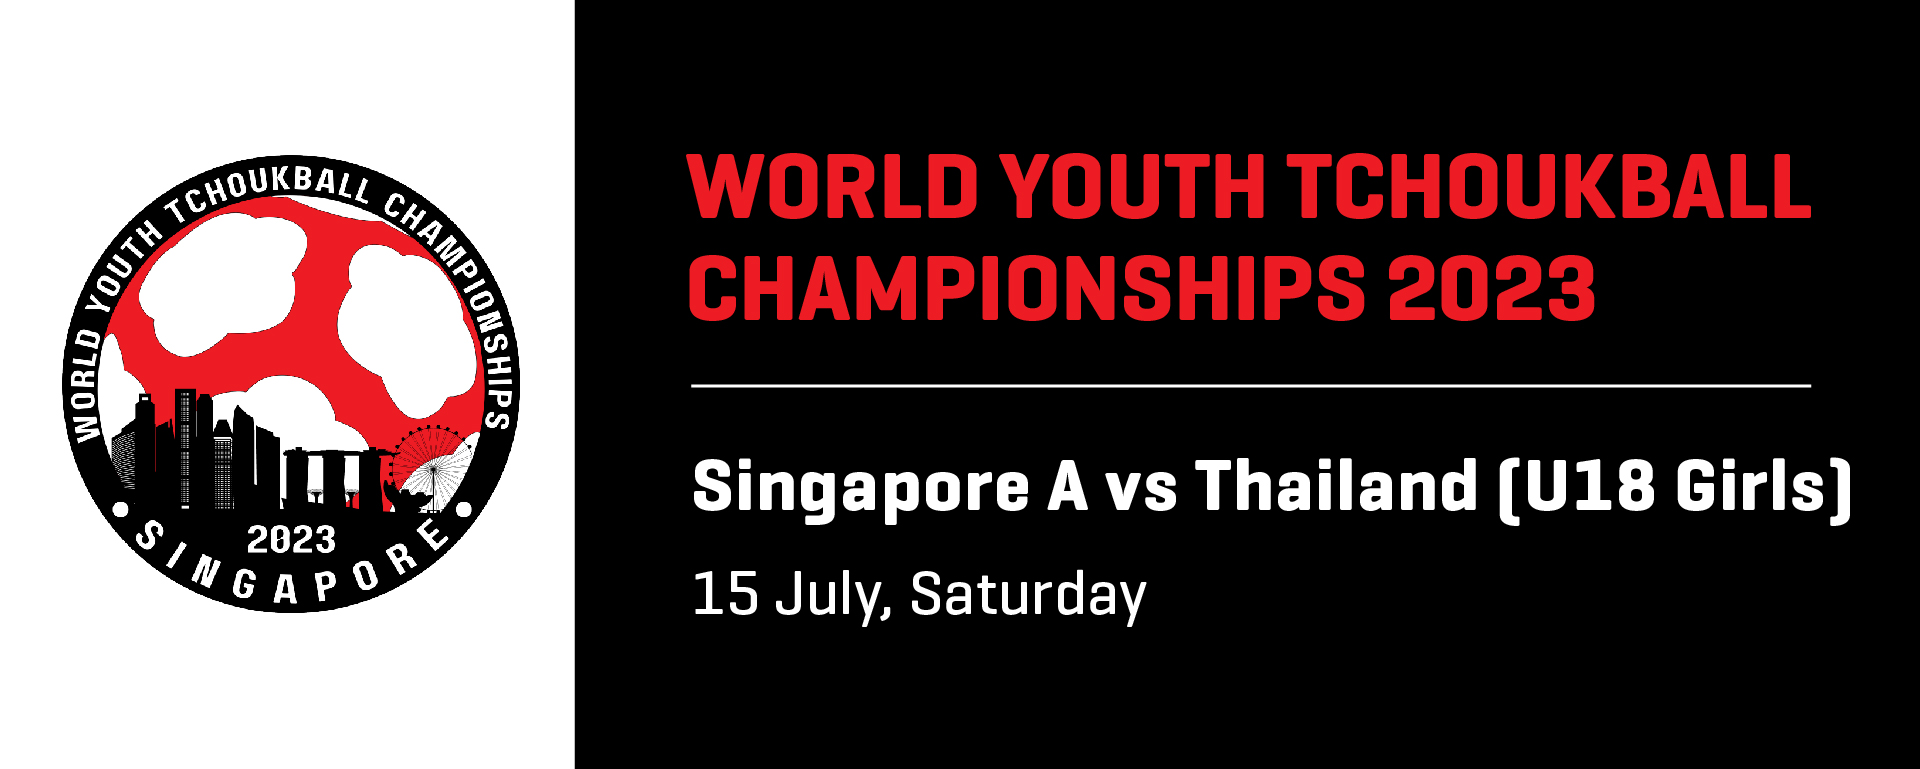 World Youth Tchoukball Championships 2023 | U18 Girls Singapore A vs Thailand